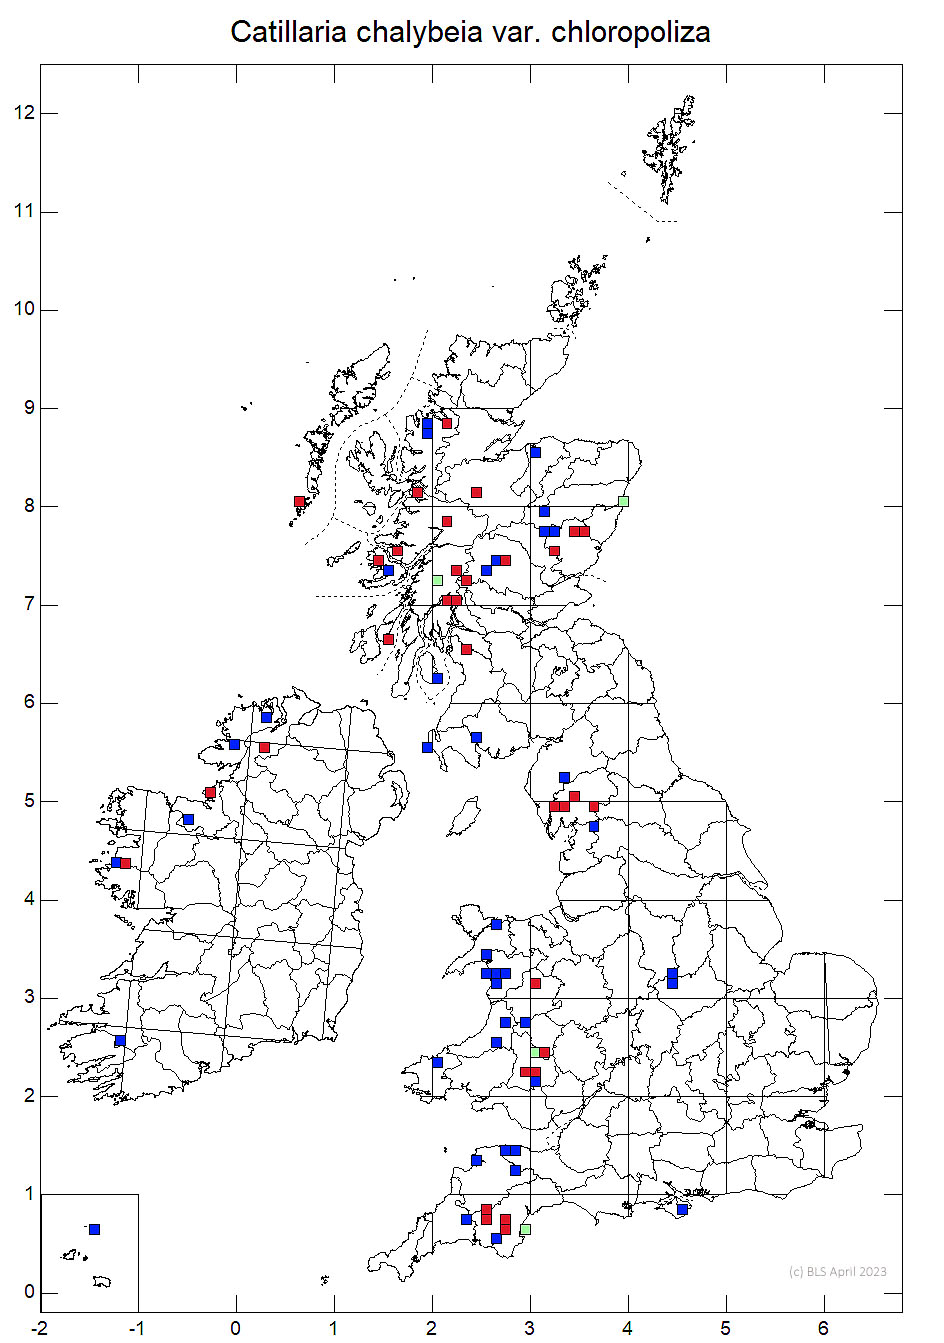 Catillaria chalybeia var. chloropoliza 10km sq distribution map